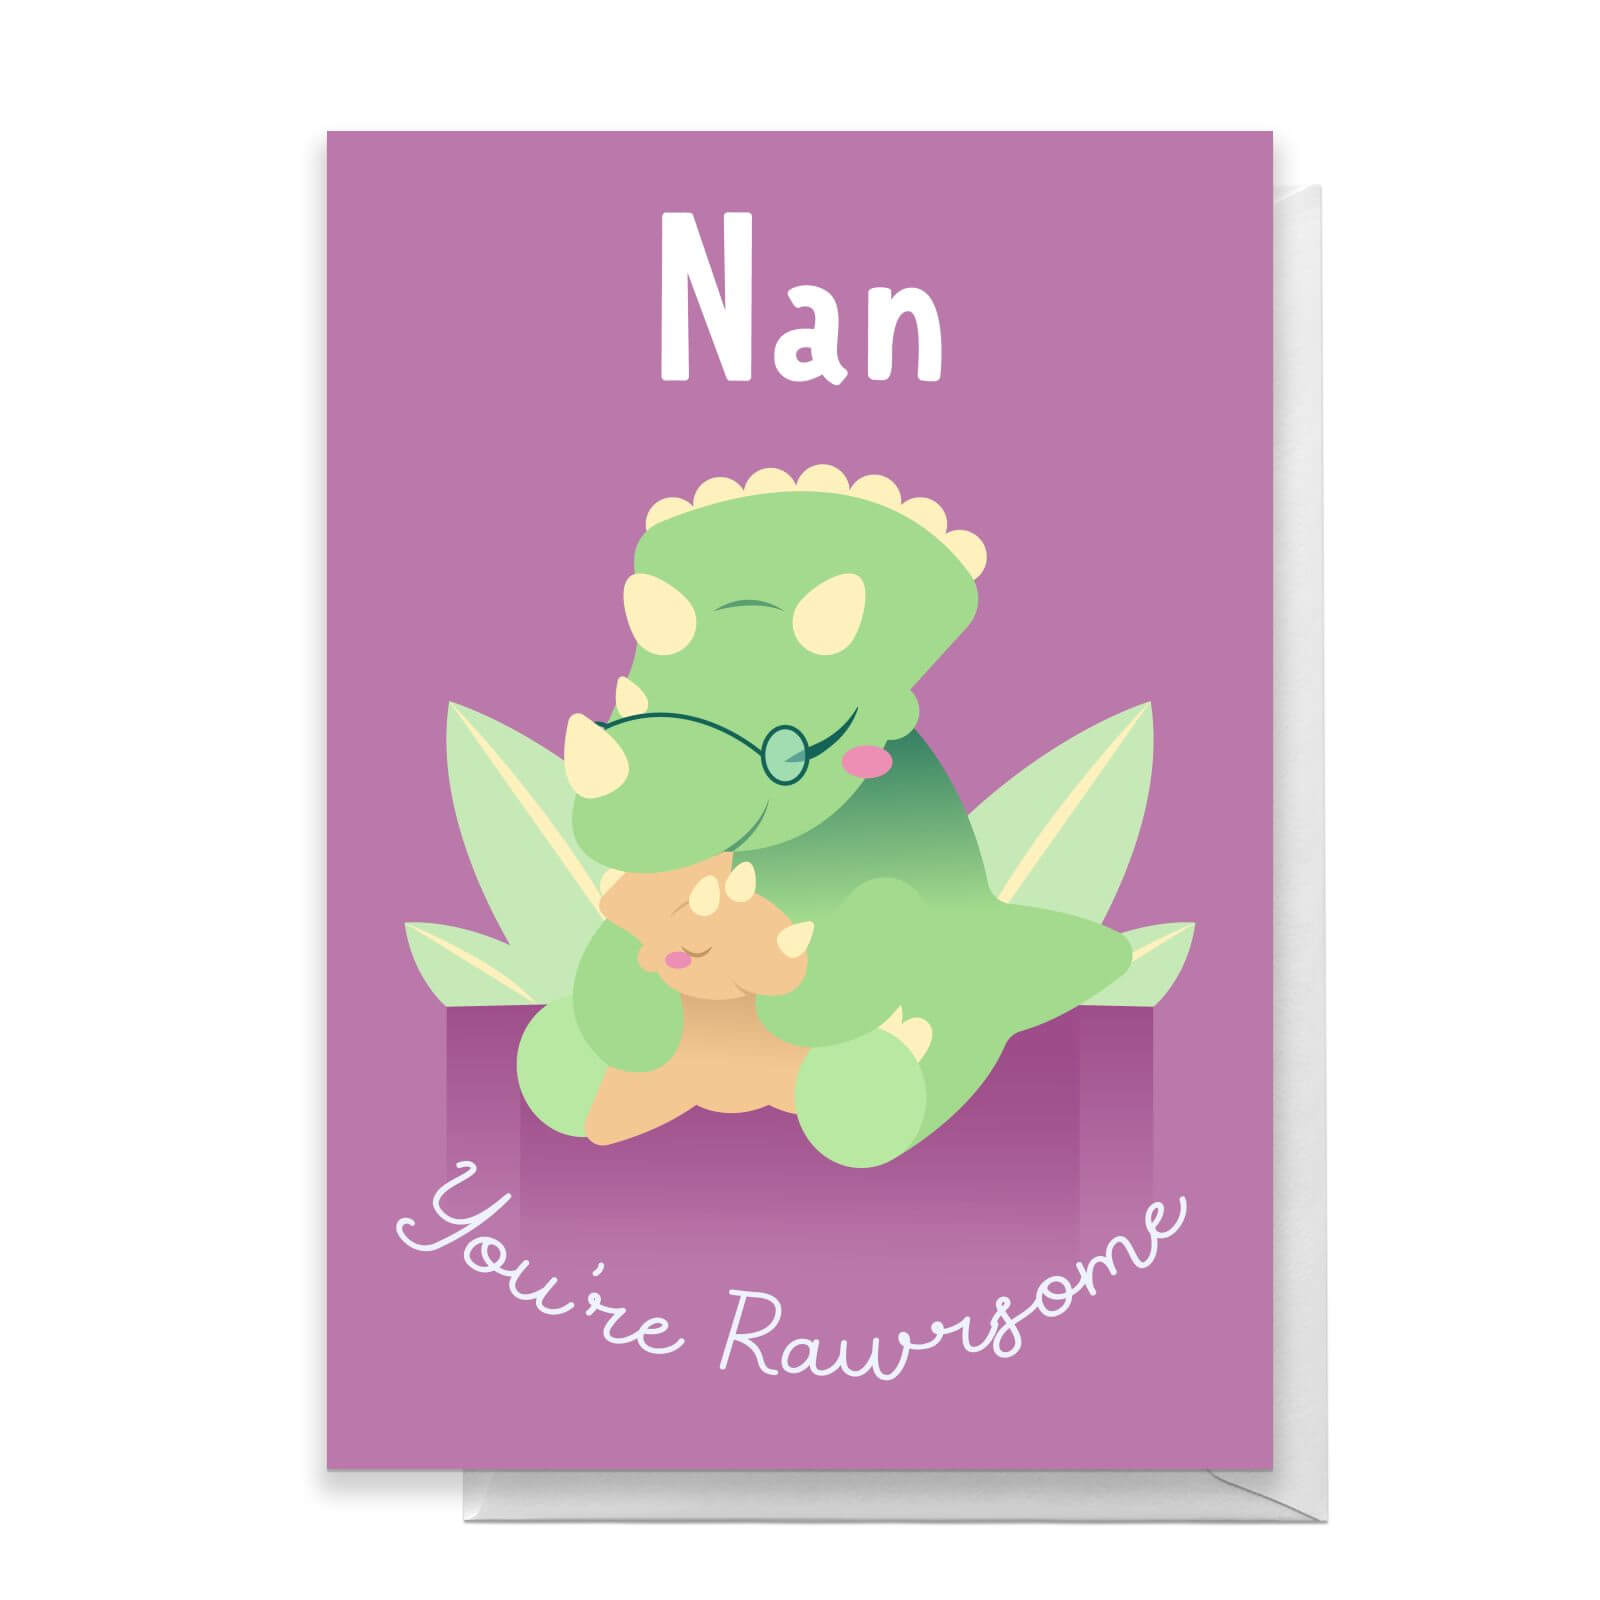 Nan You're Rawrsome Greetings Card - Standard Card